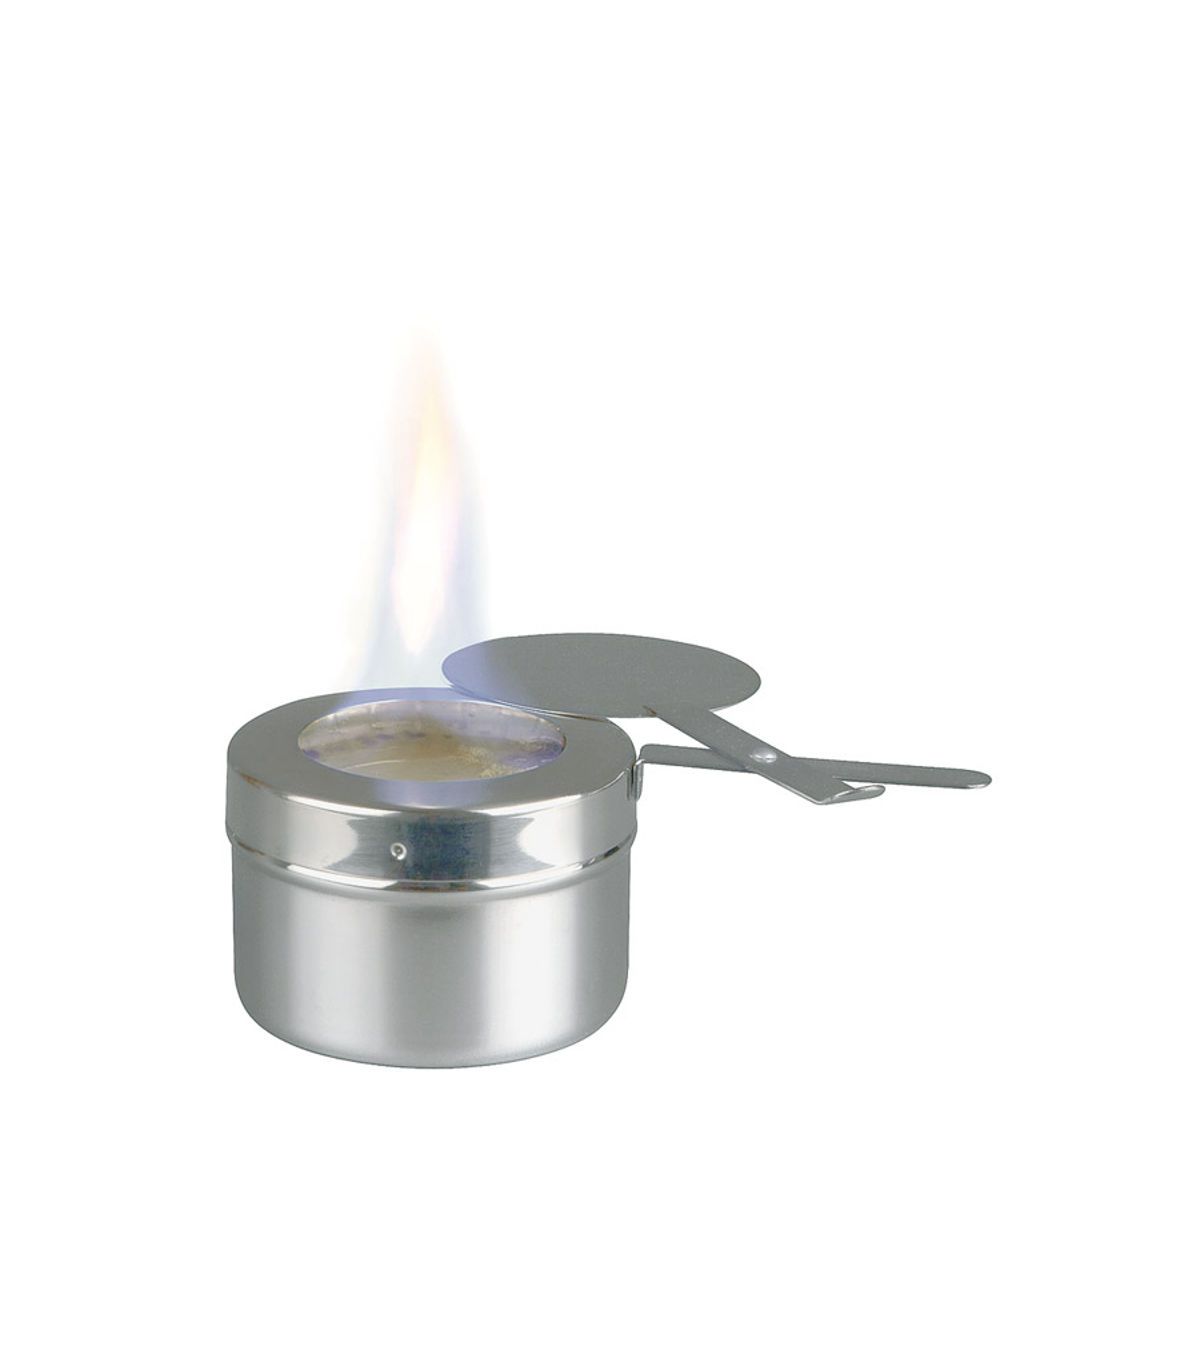 Gel Combustible / Brûleur pour Chafing Dish – EVITRINE DAKAR